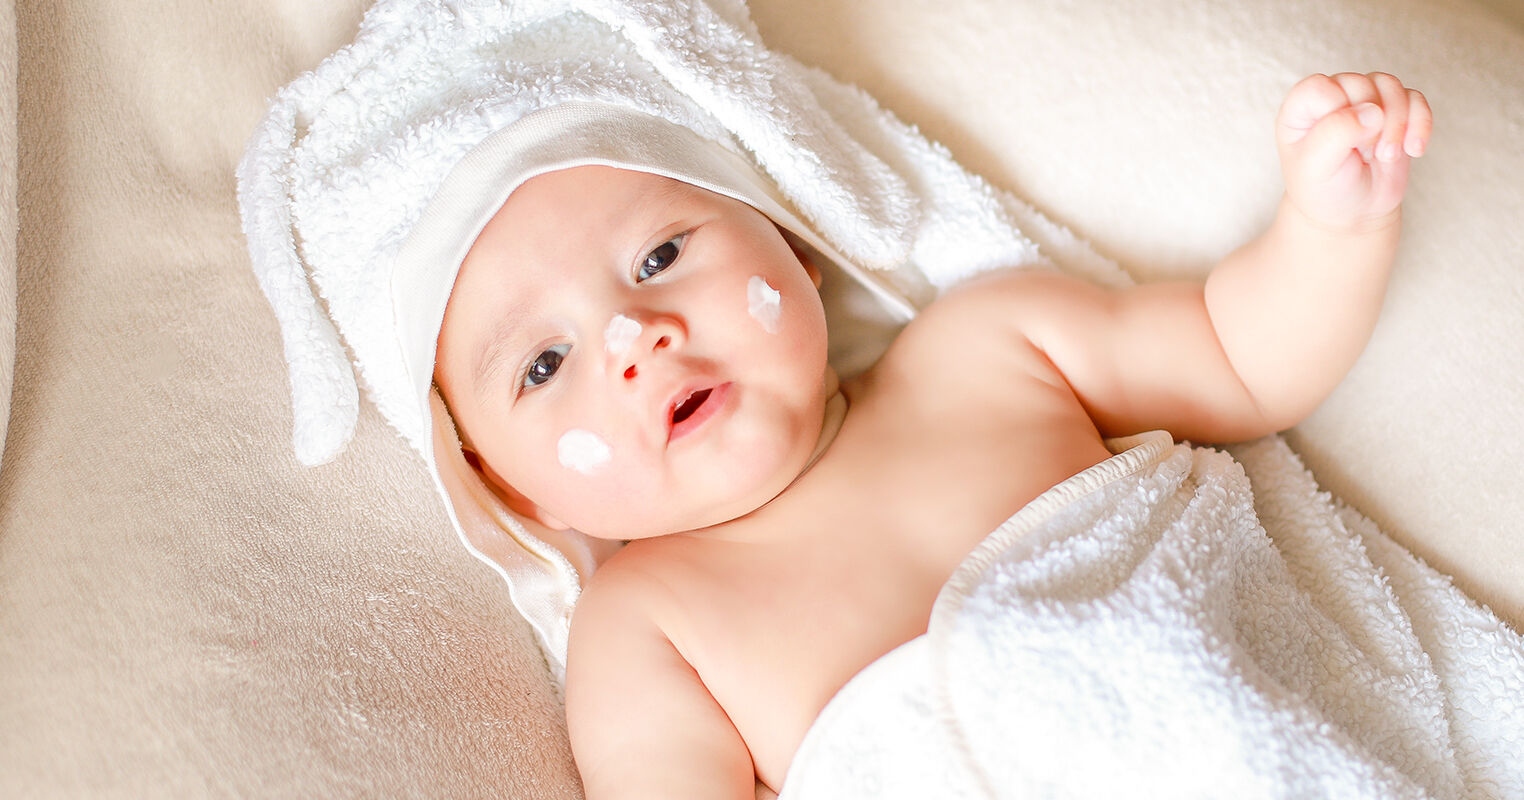 Skin Health - Should You Moisturise Your Baby's Skin